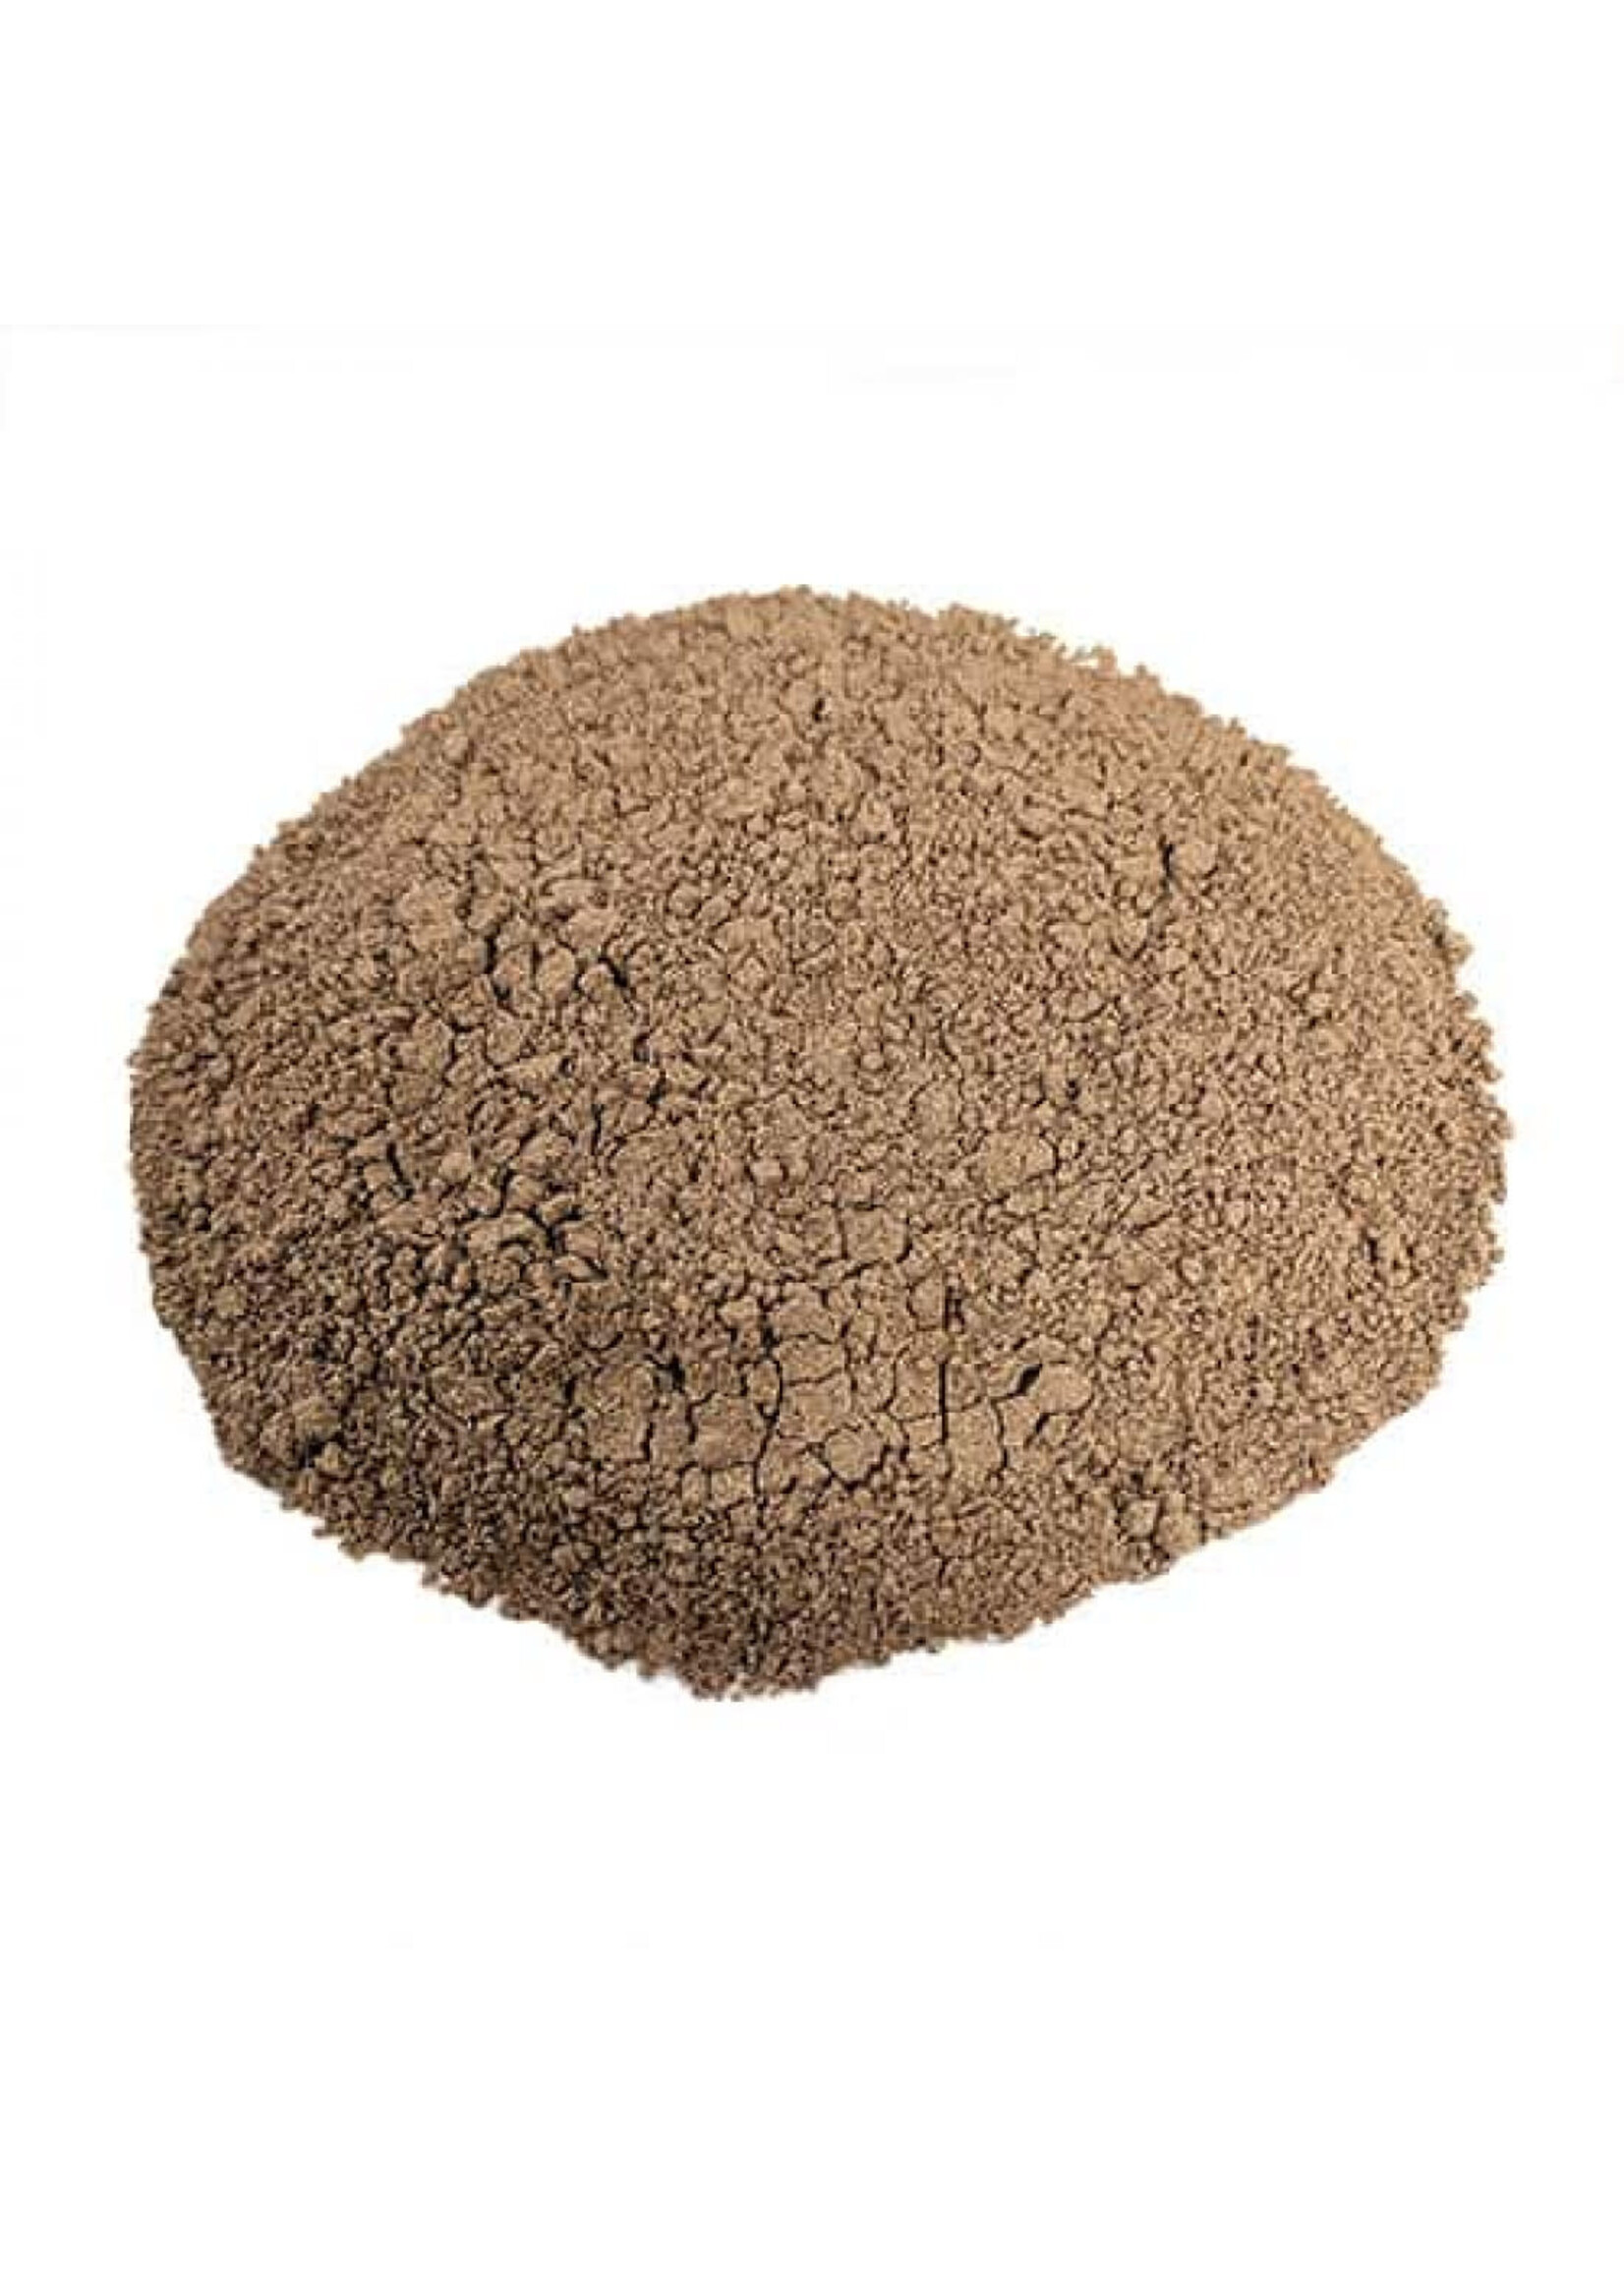 Agaricus Blazei Fungi/Mushroom (Agaricus subrufescens) | Powdered Organic